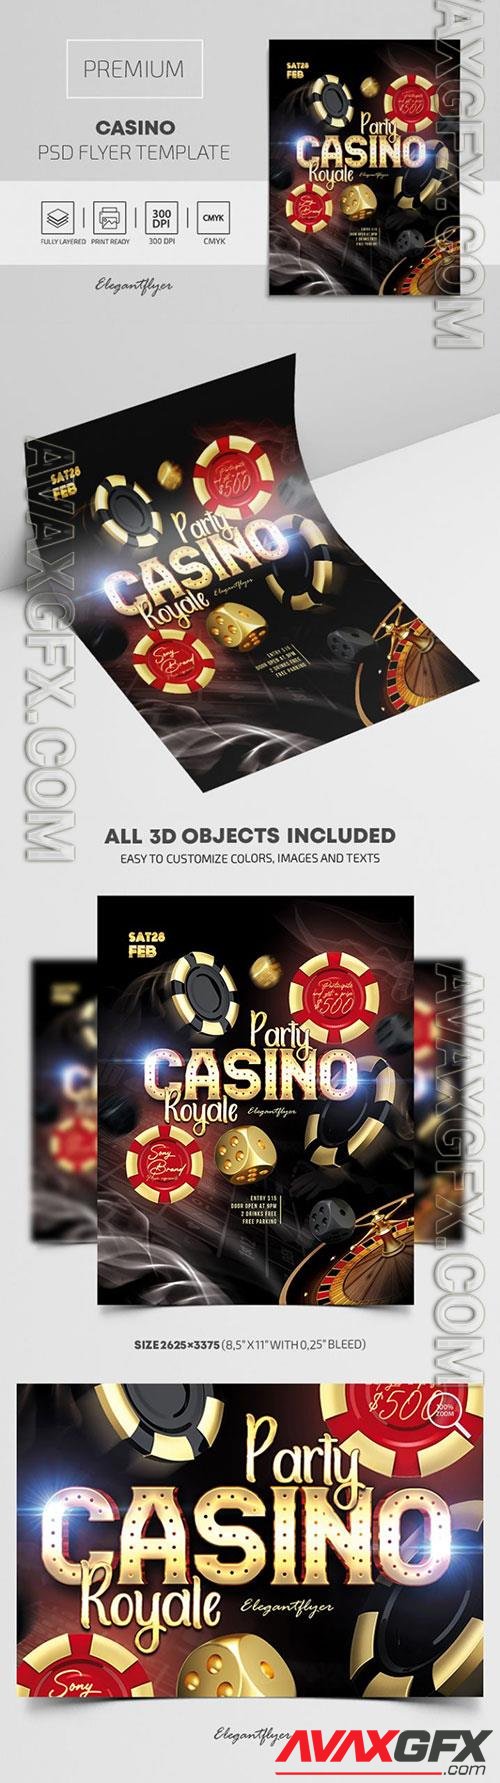 Casino Premium PSD Flyer Template